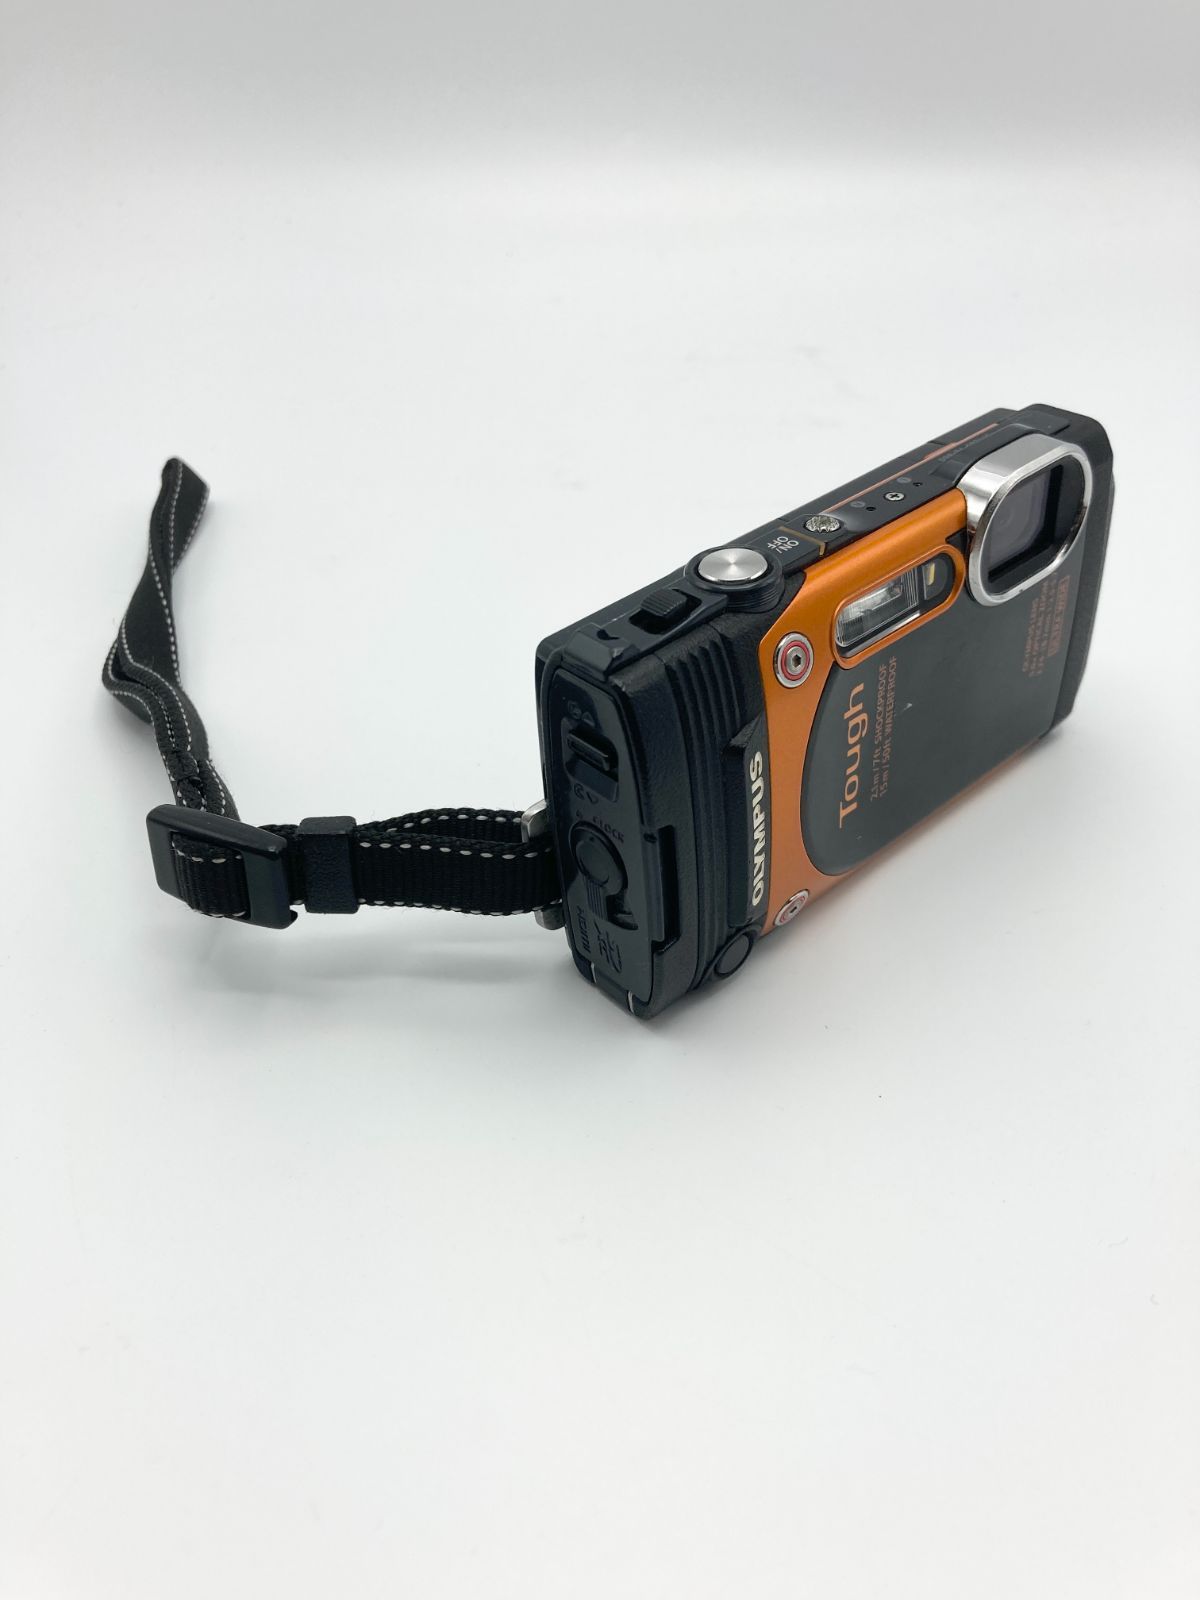 OLYMPUS デジタルカメラ STYLUS TG-860 Tough オレンジ - 【インボイス ...